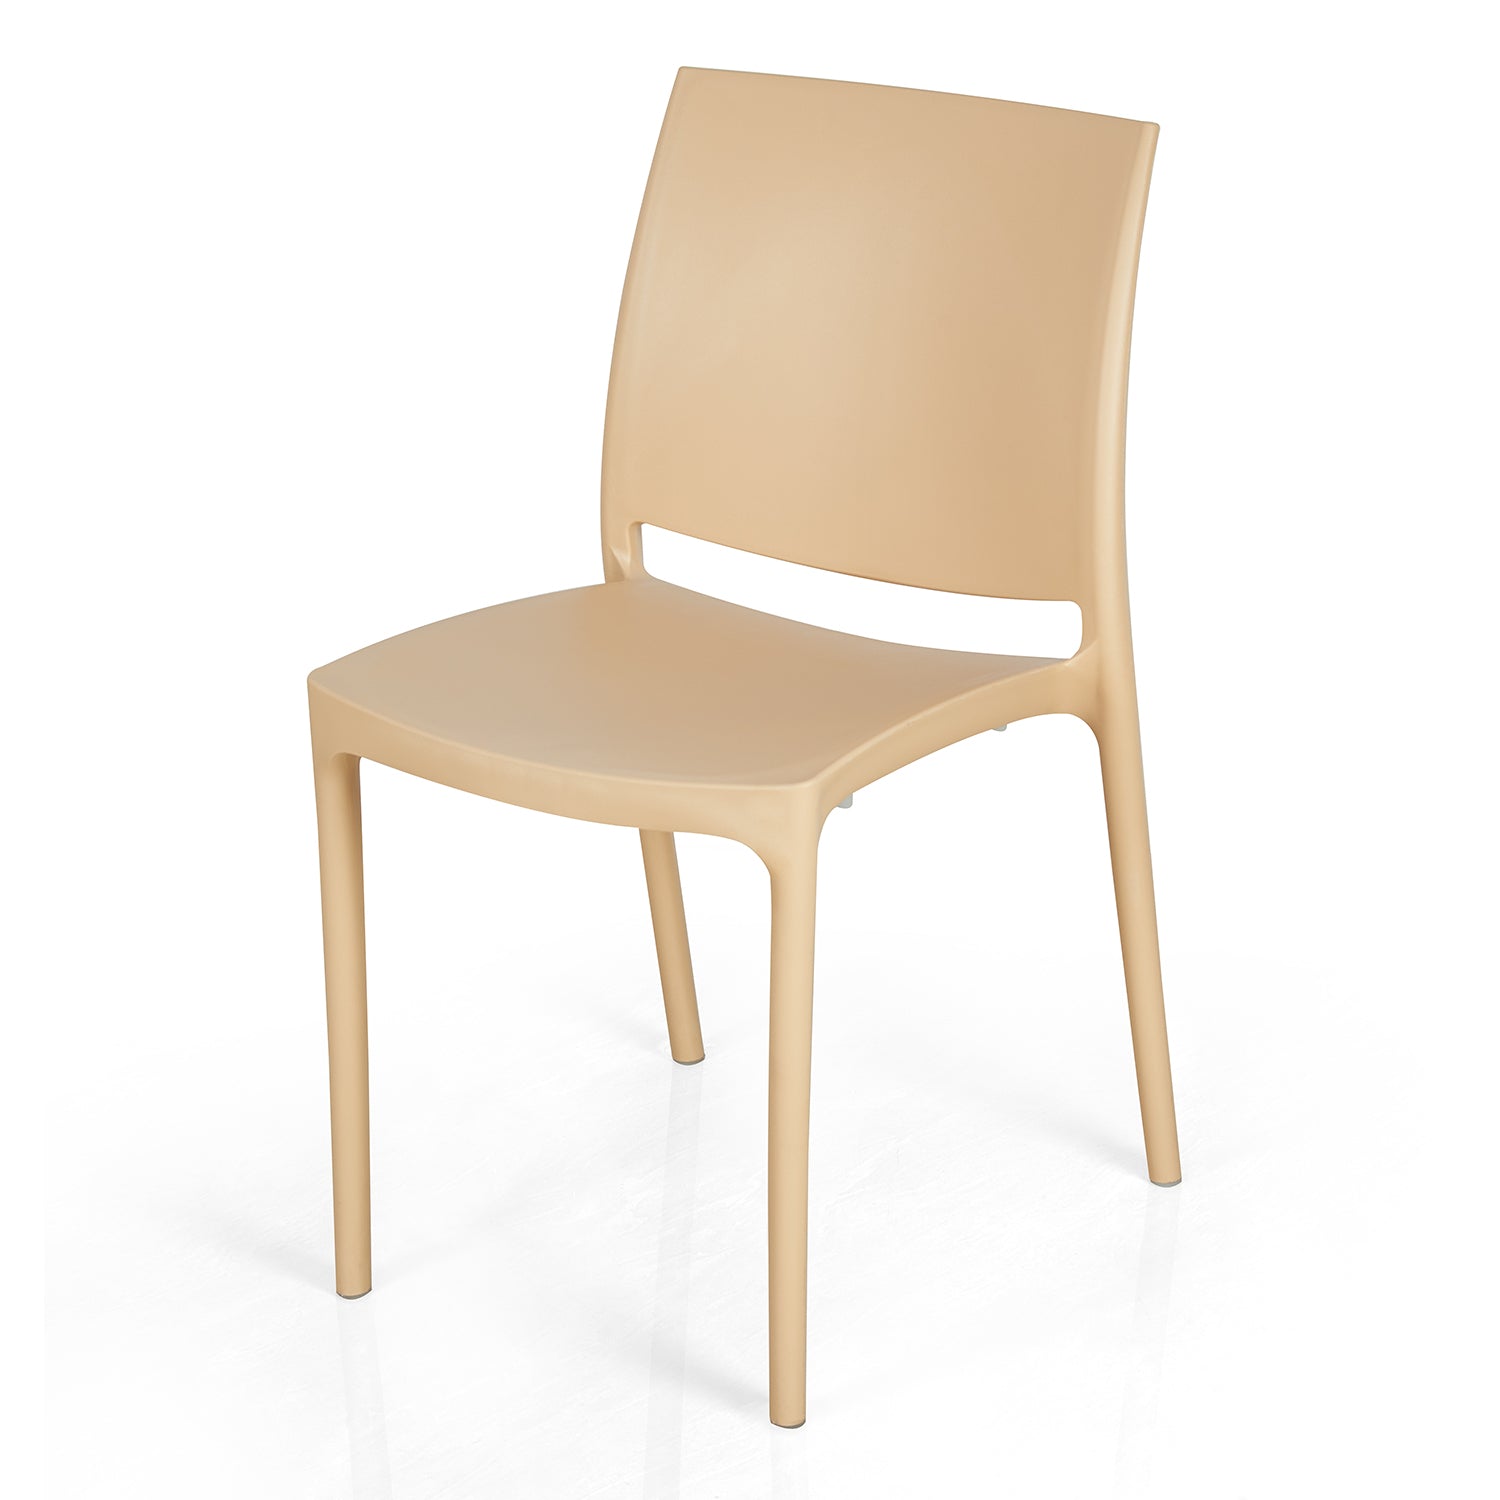 Nilkamal Novella 08 Chair (Biscuit)